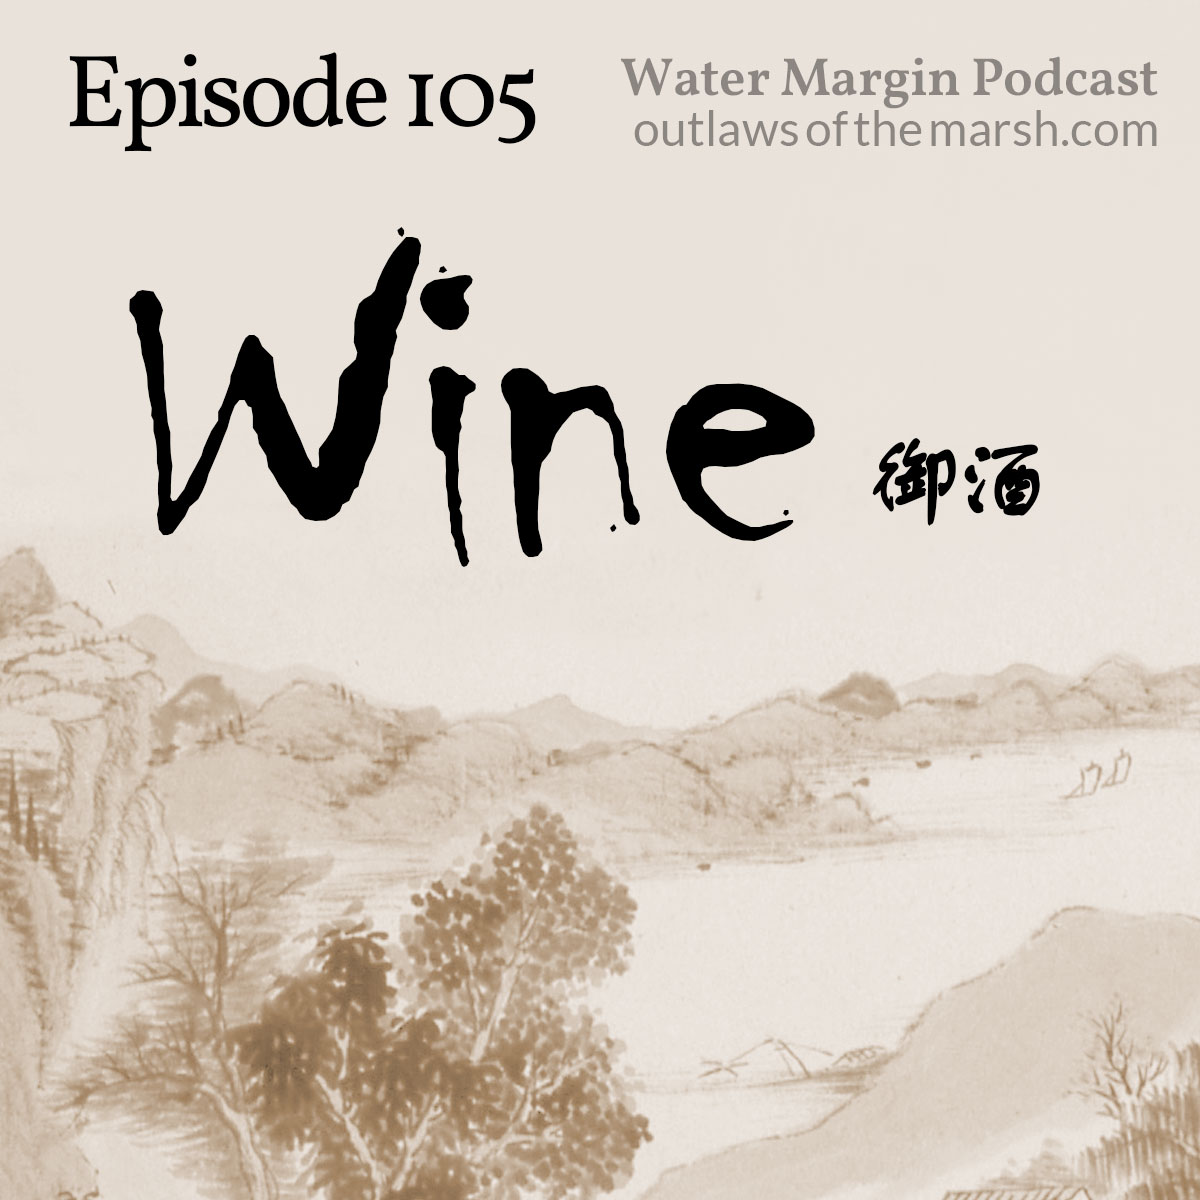 Water Margin Podcast: Episode 105